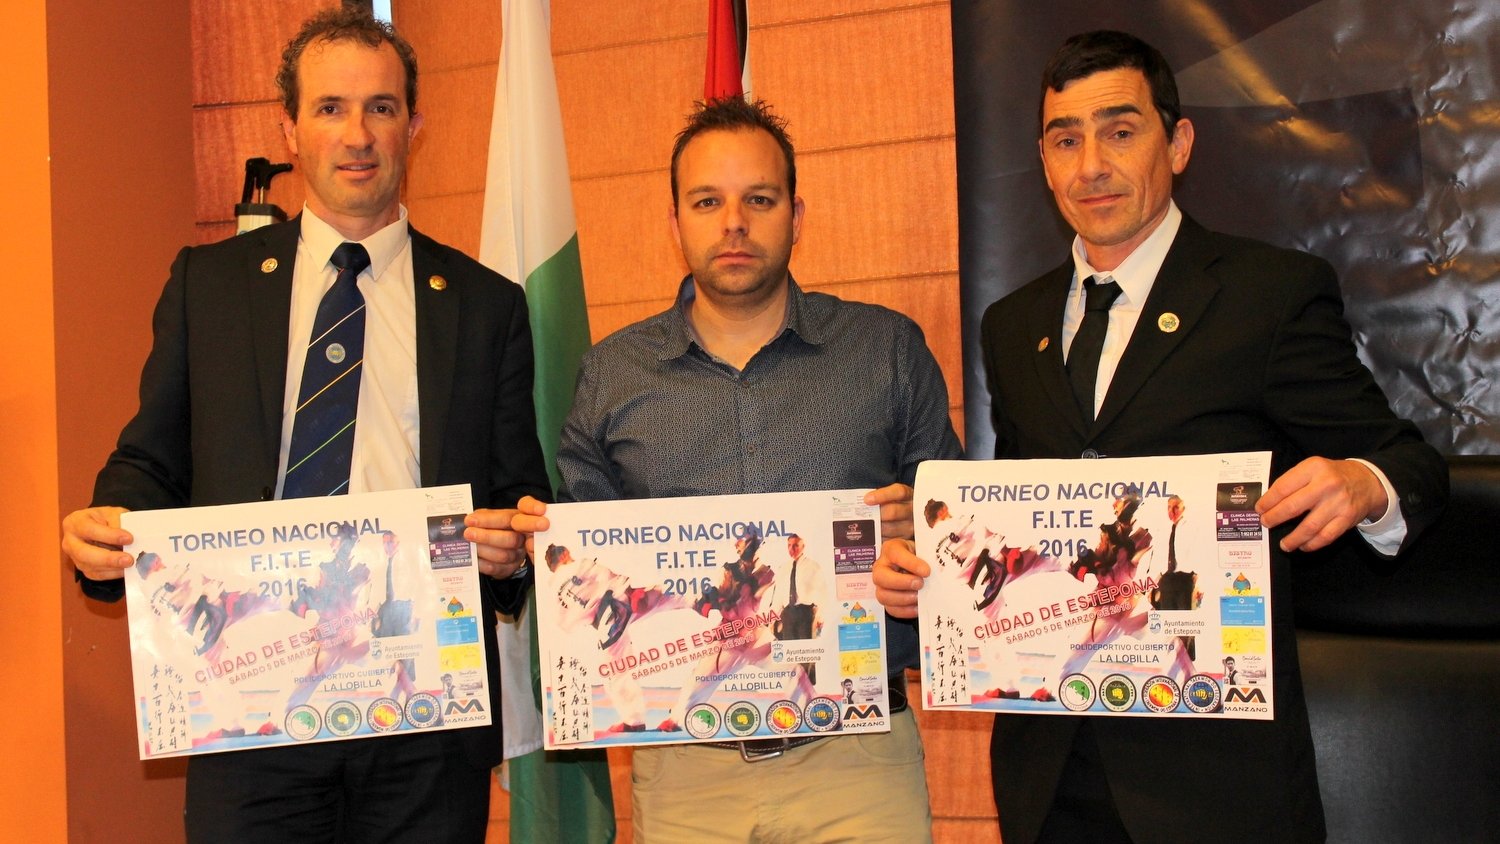 El Torneo Nacional de Taekwon-Do FITE 2016 reune en Estepona a todos los clubes federados de España